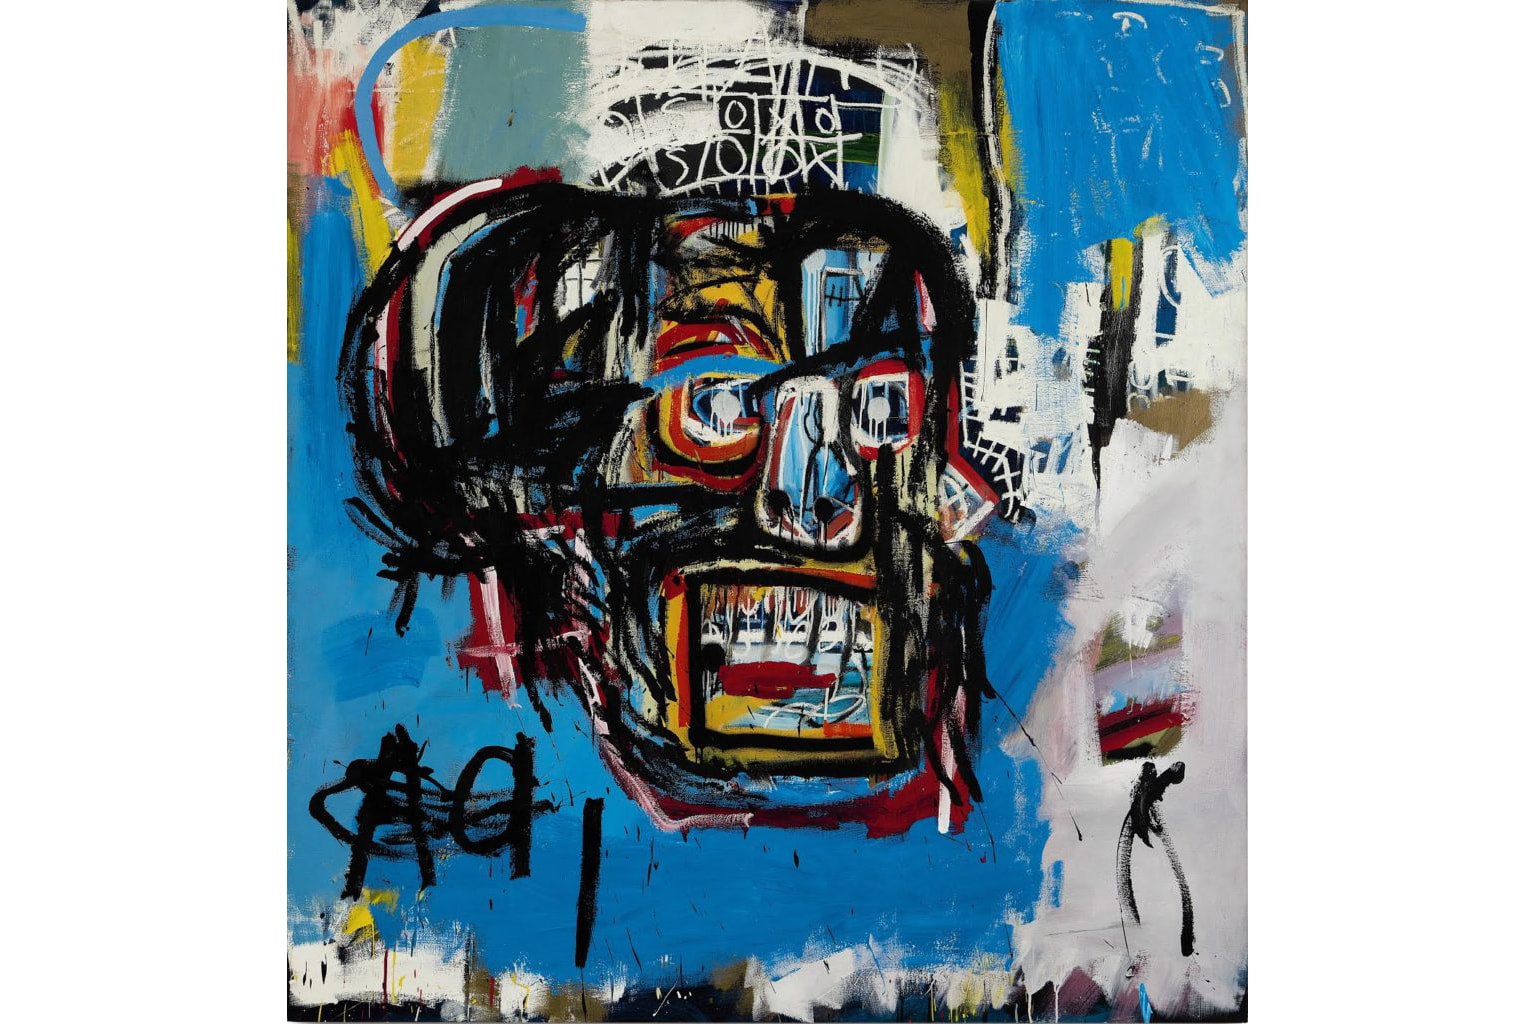 Jean-Michel Basquiat 'Untitled' 1982 $60 Million Sotheby's New York Artwork Art Auction